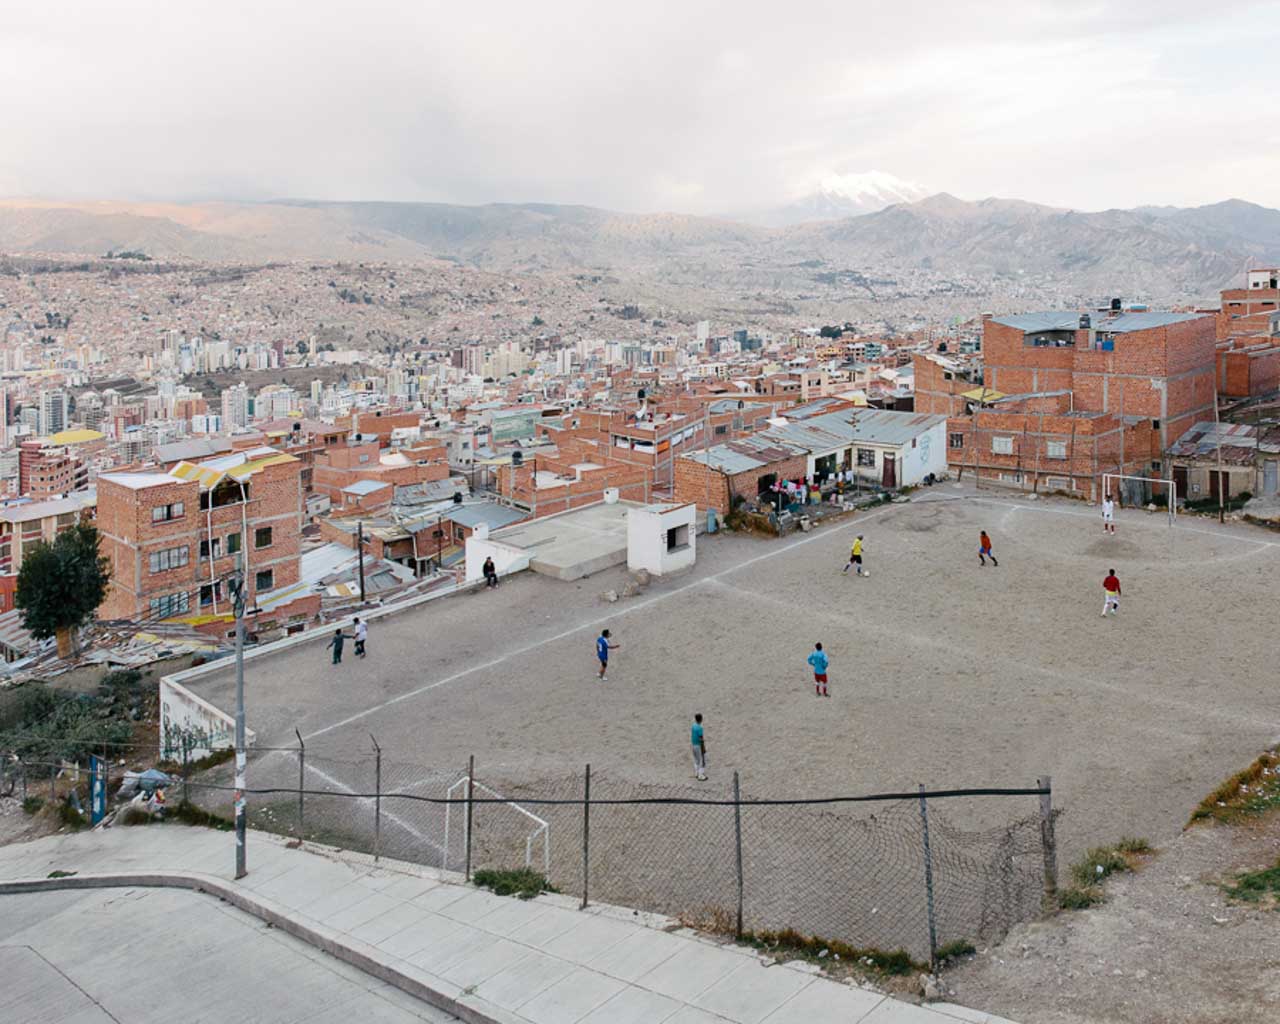 Terrain de football à La Paz Bolivie